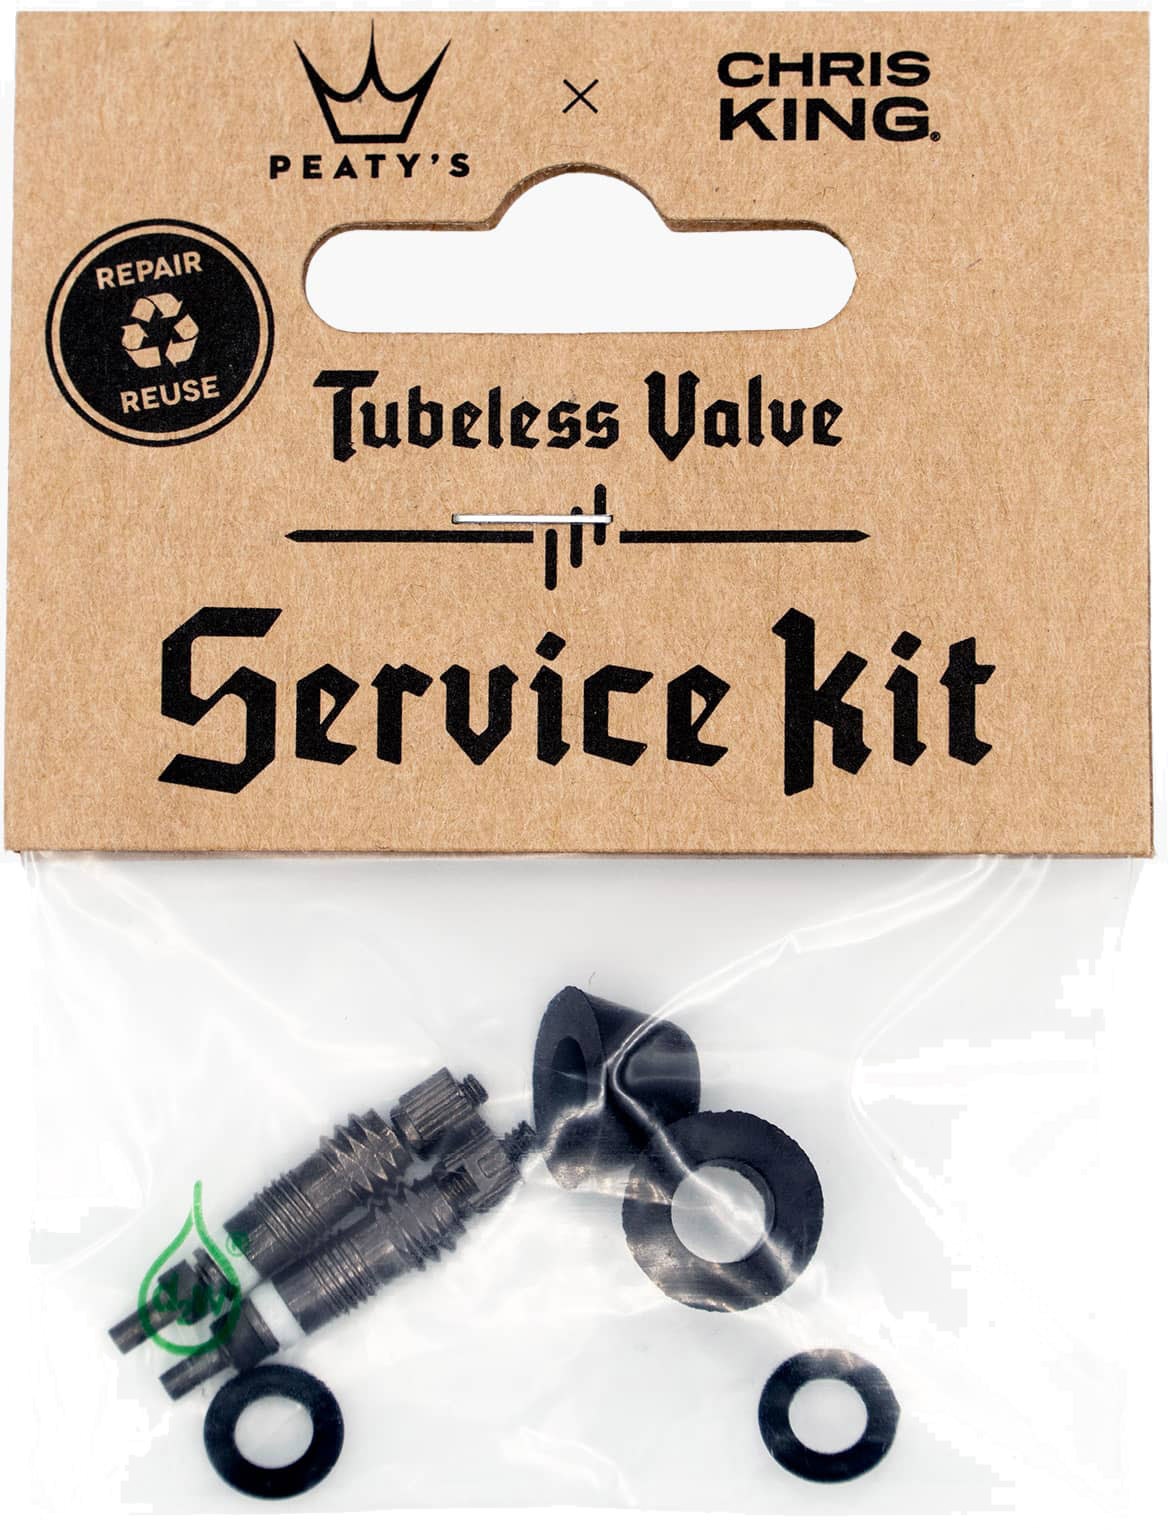 Peaty's x ChrisKing Tubeless Valve Service Kit